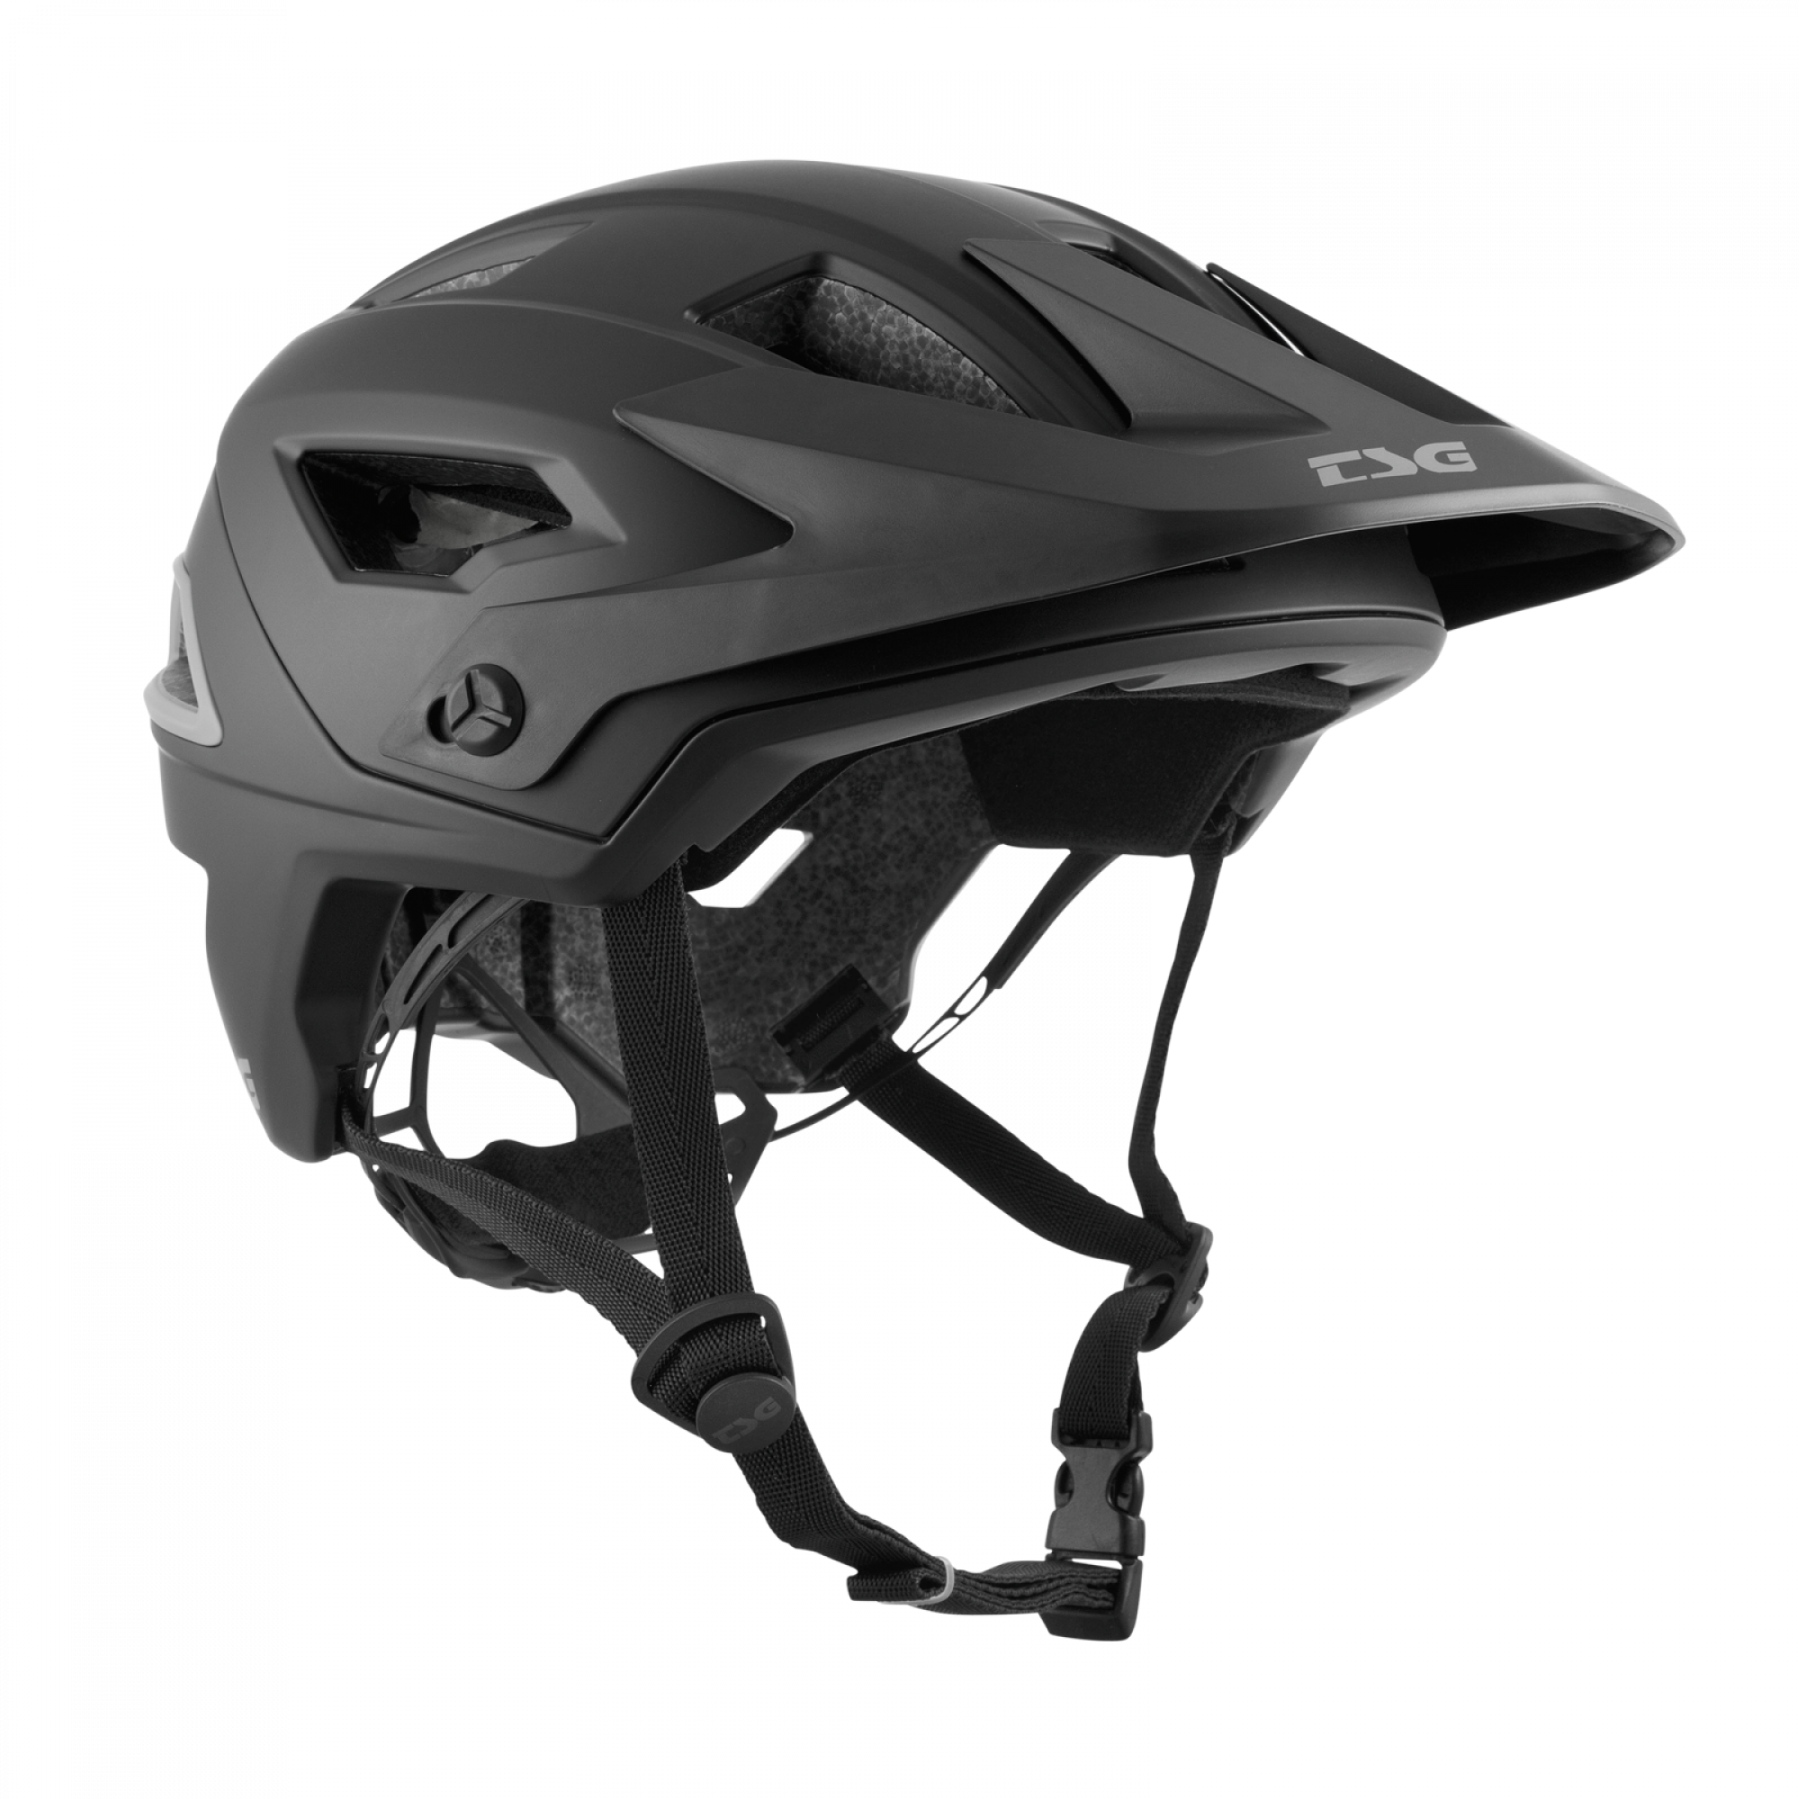 Produktbild von TSG Chatter Solid Color Helm - satin black